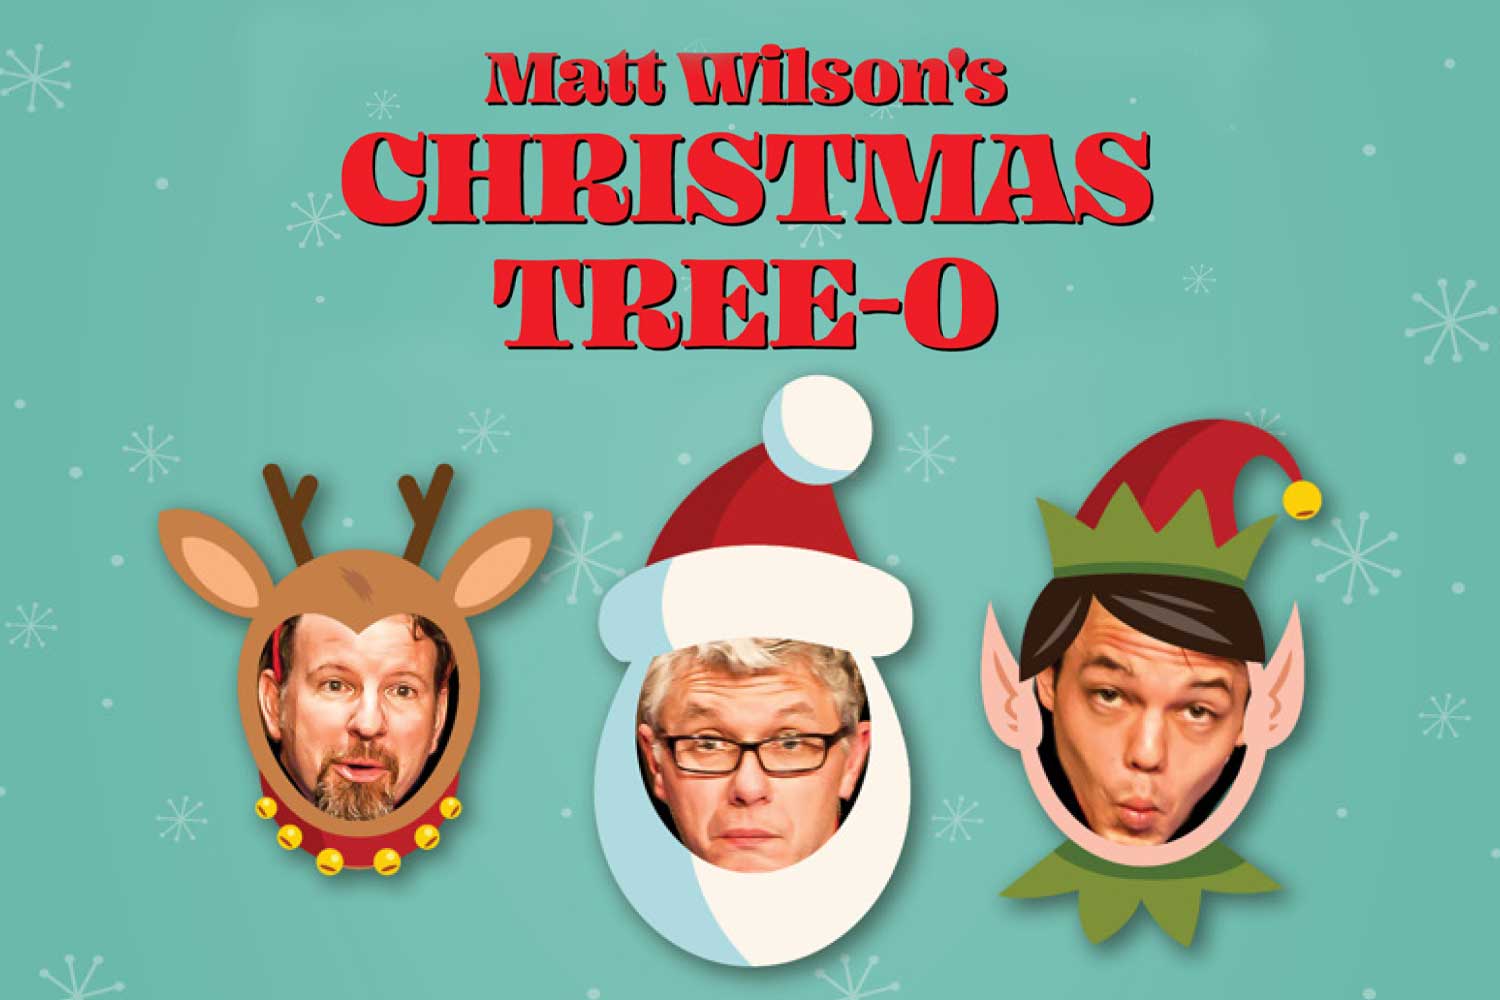 Matt Wilson’s Christmas Tree-O